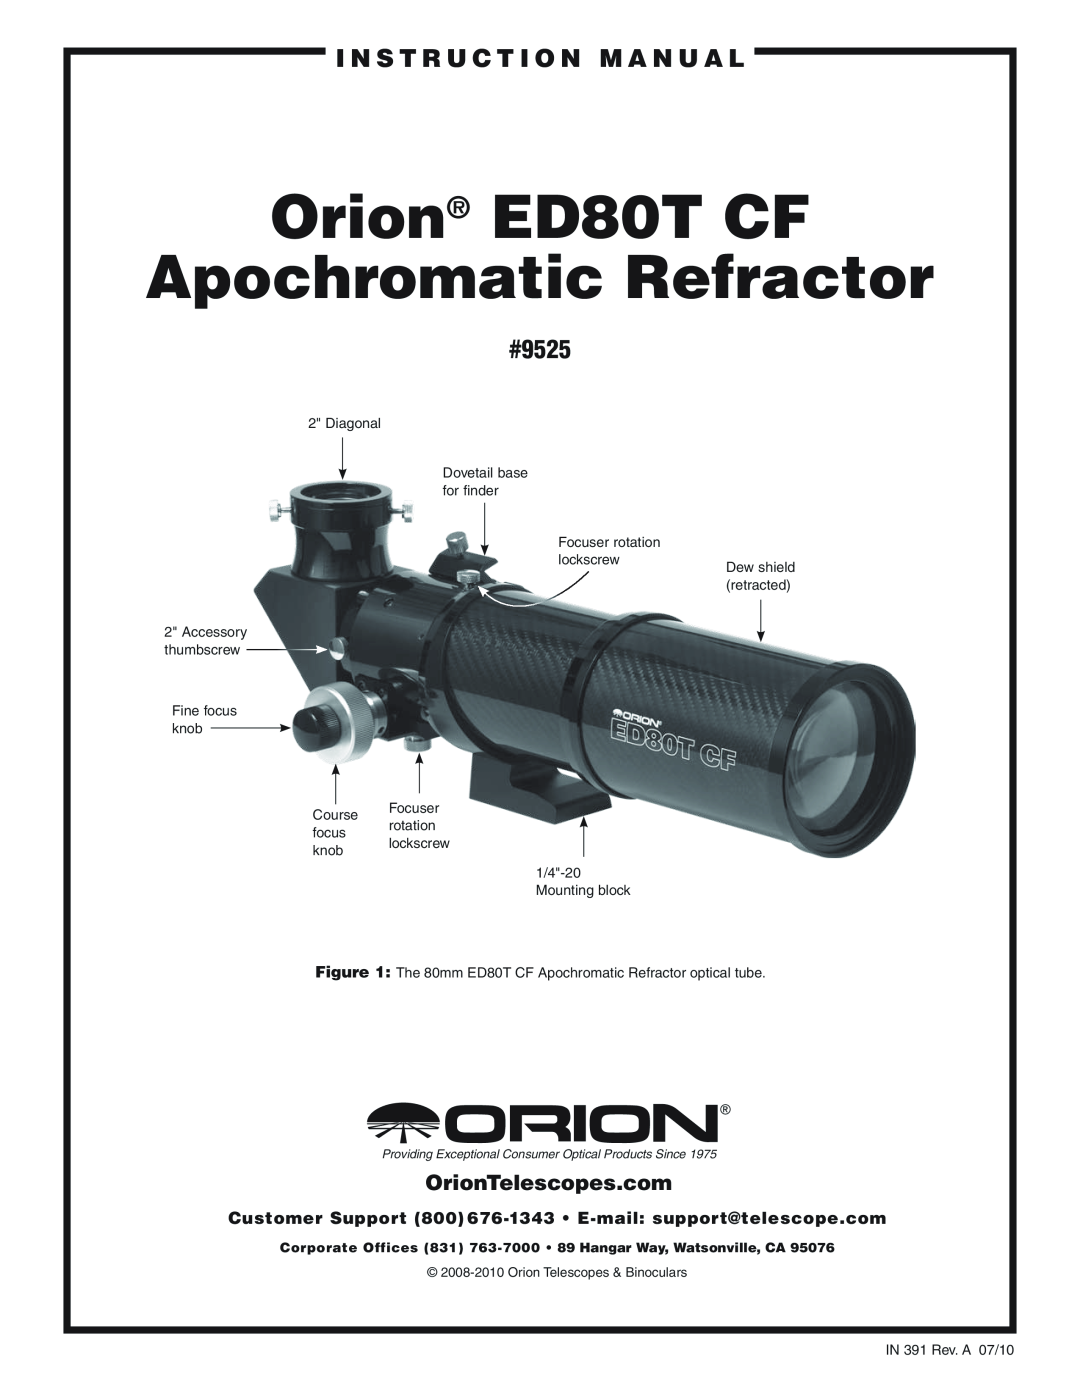 Orion ED80T CF instruction manual i n s t r u c t i o n M a n u a l, #9525, OrionTelescopes.com 